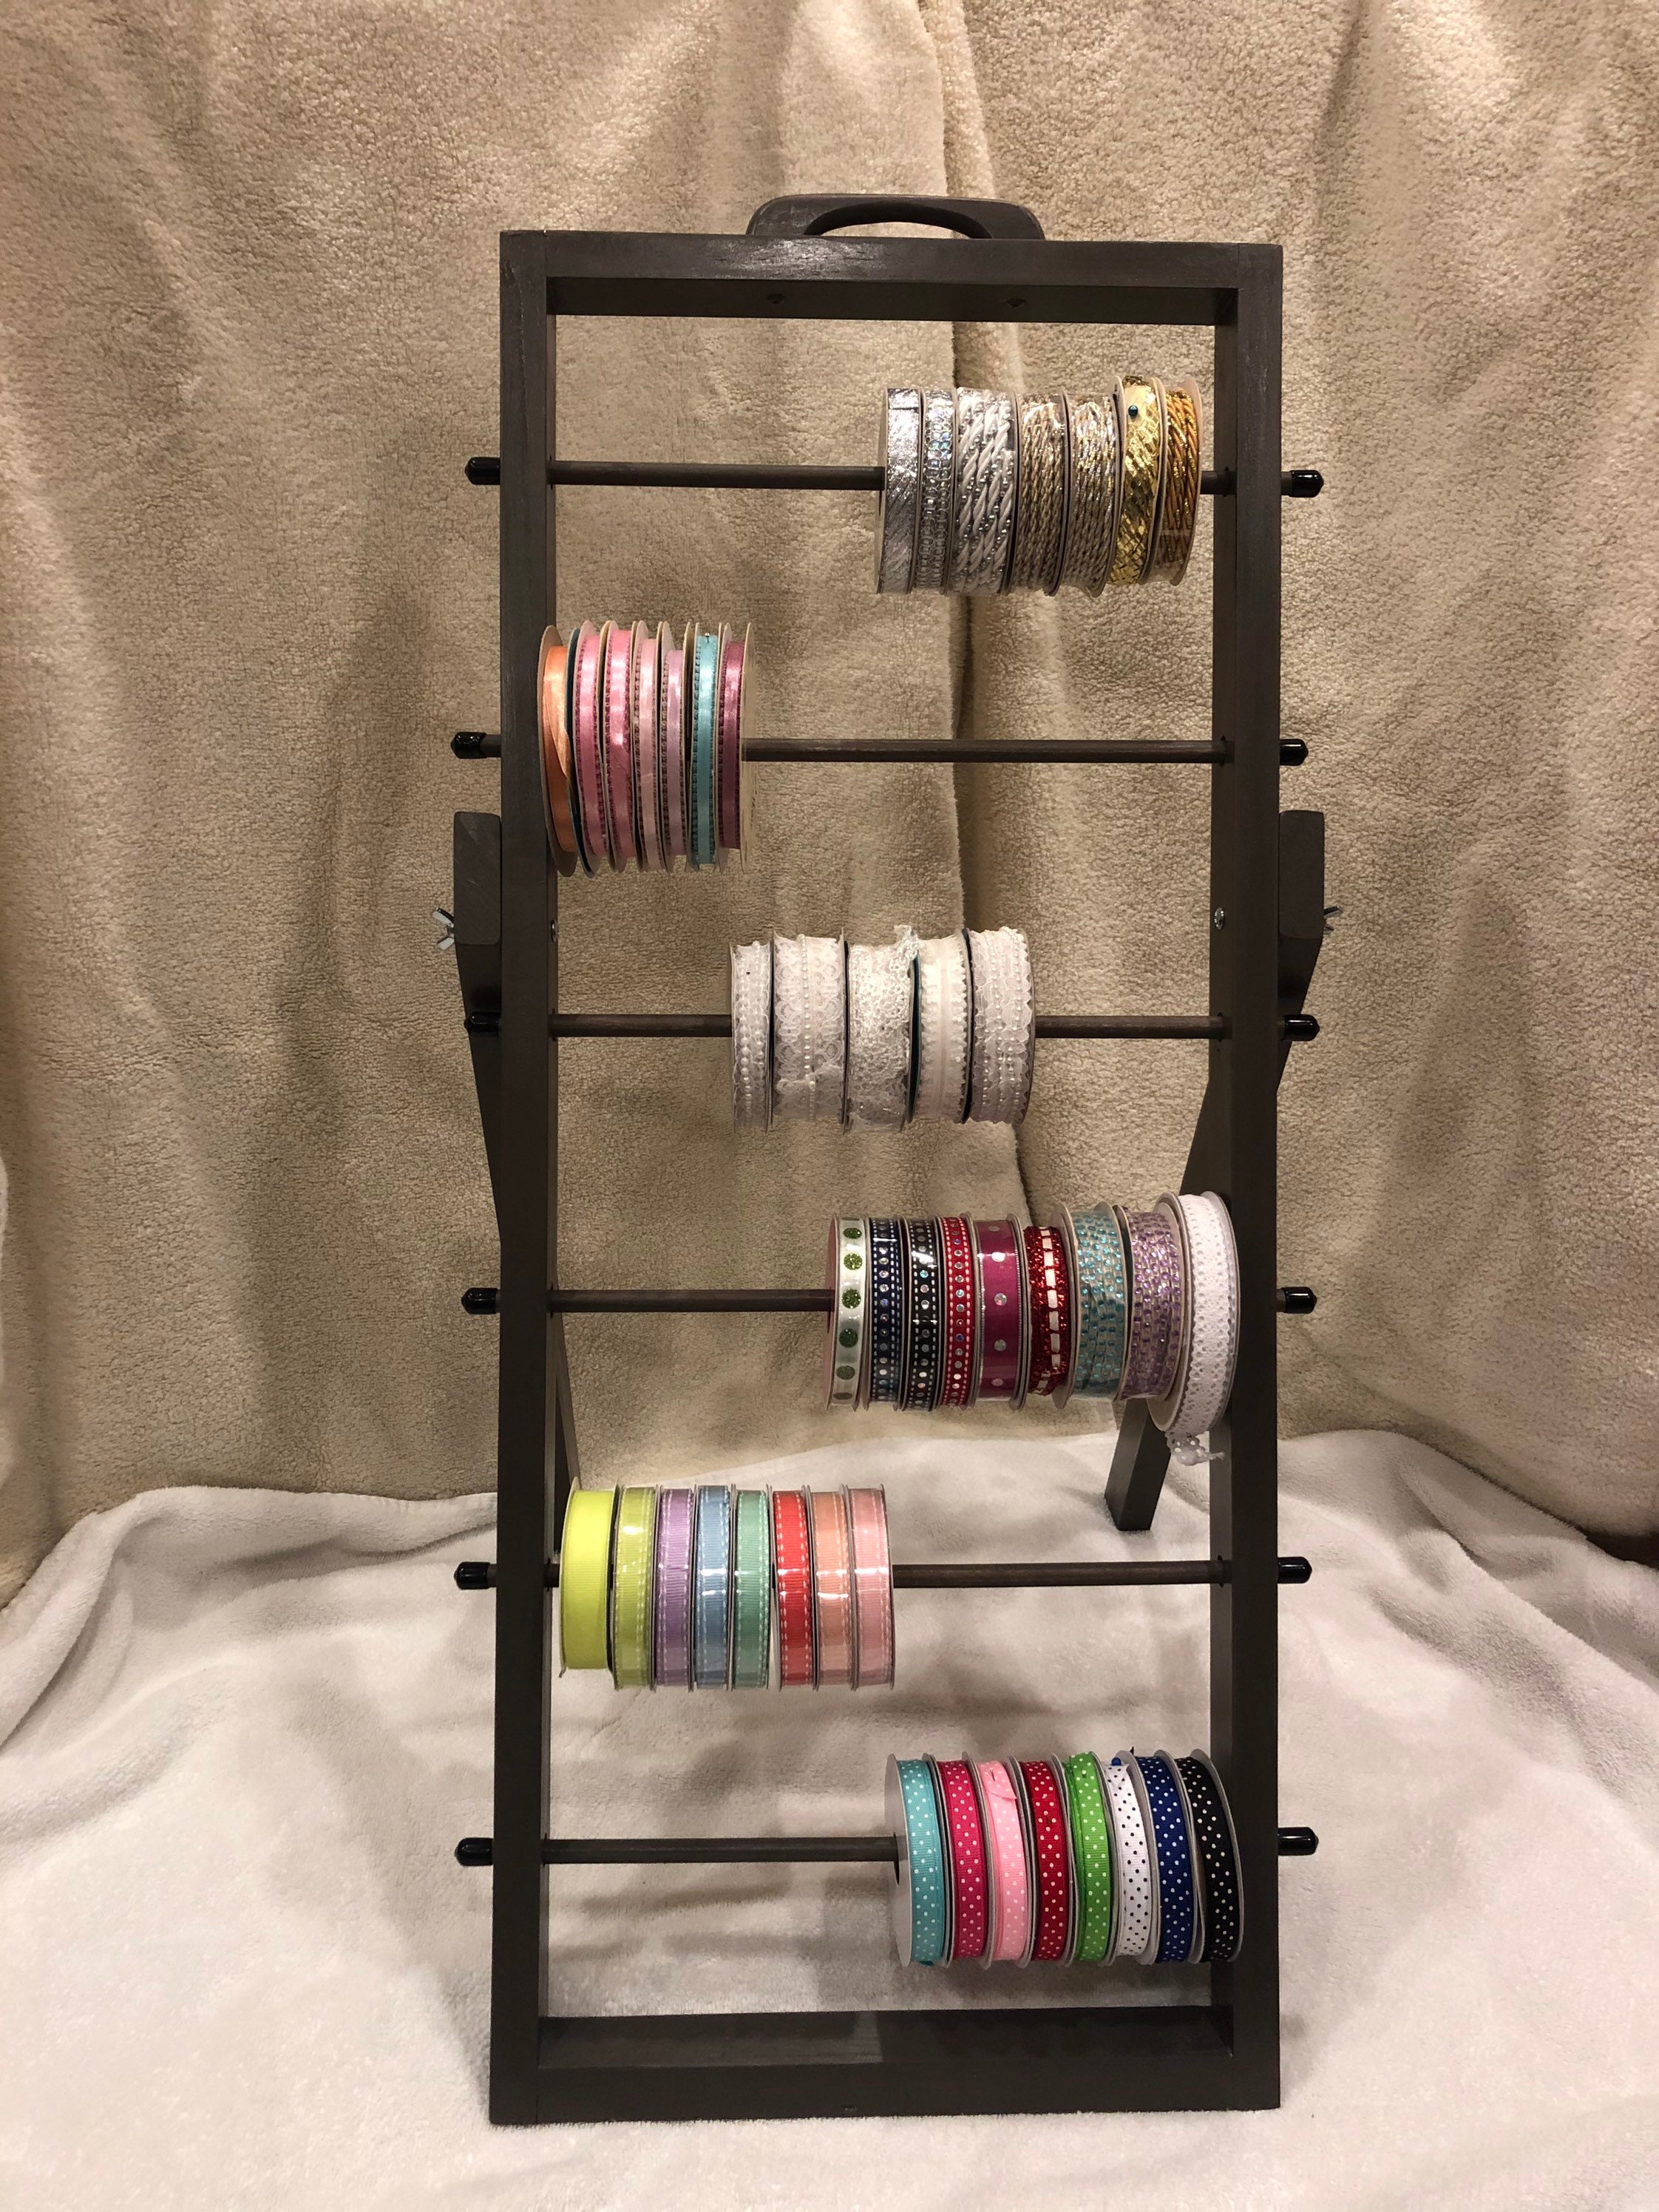 Wire Spool Rack Thread Holder Organizer Ribbons Roll Storage